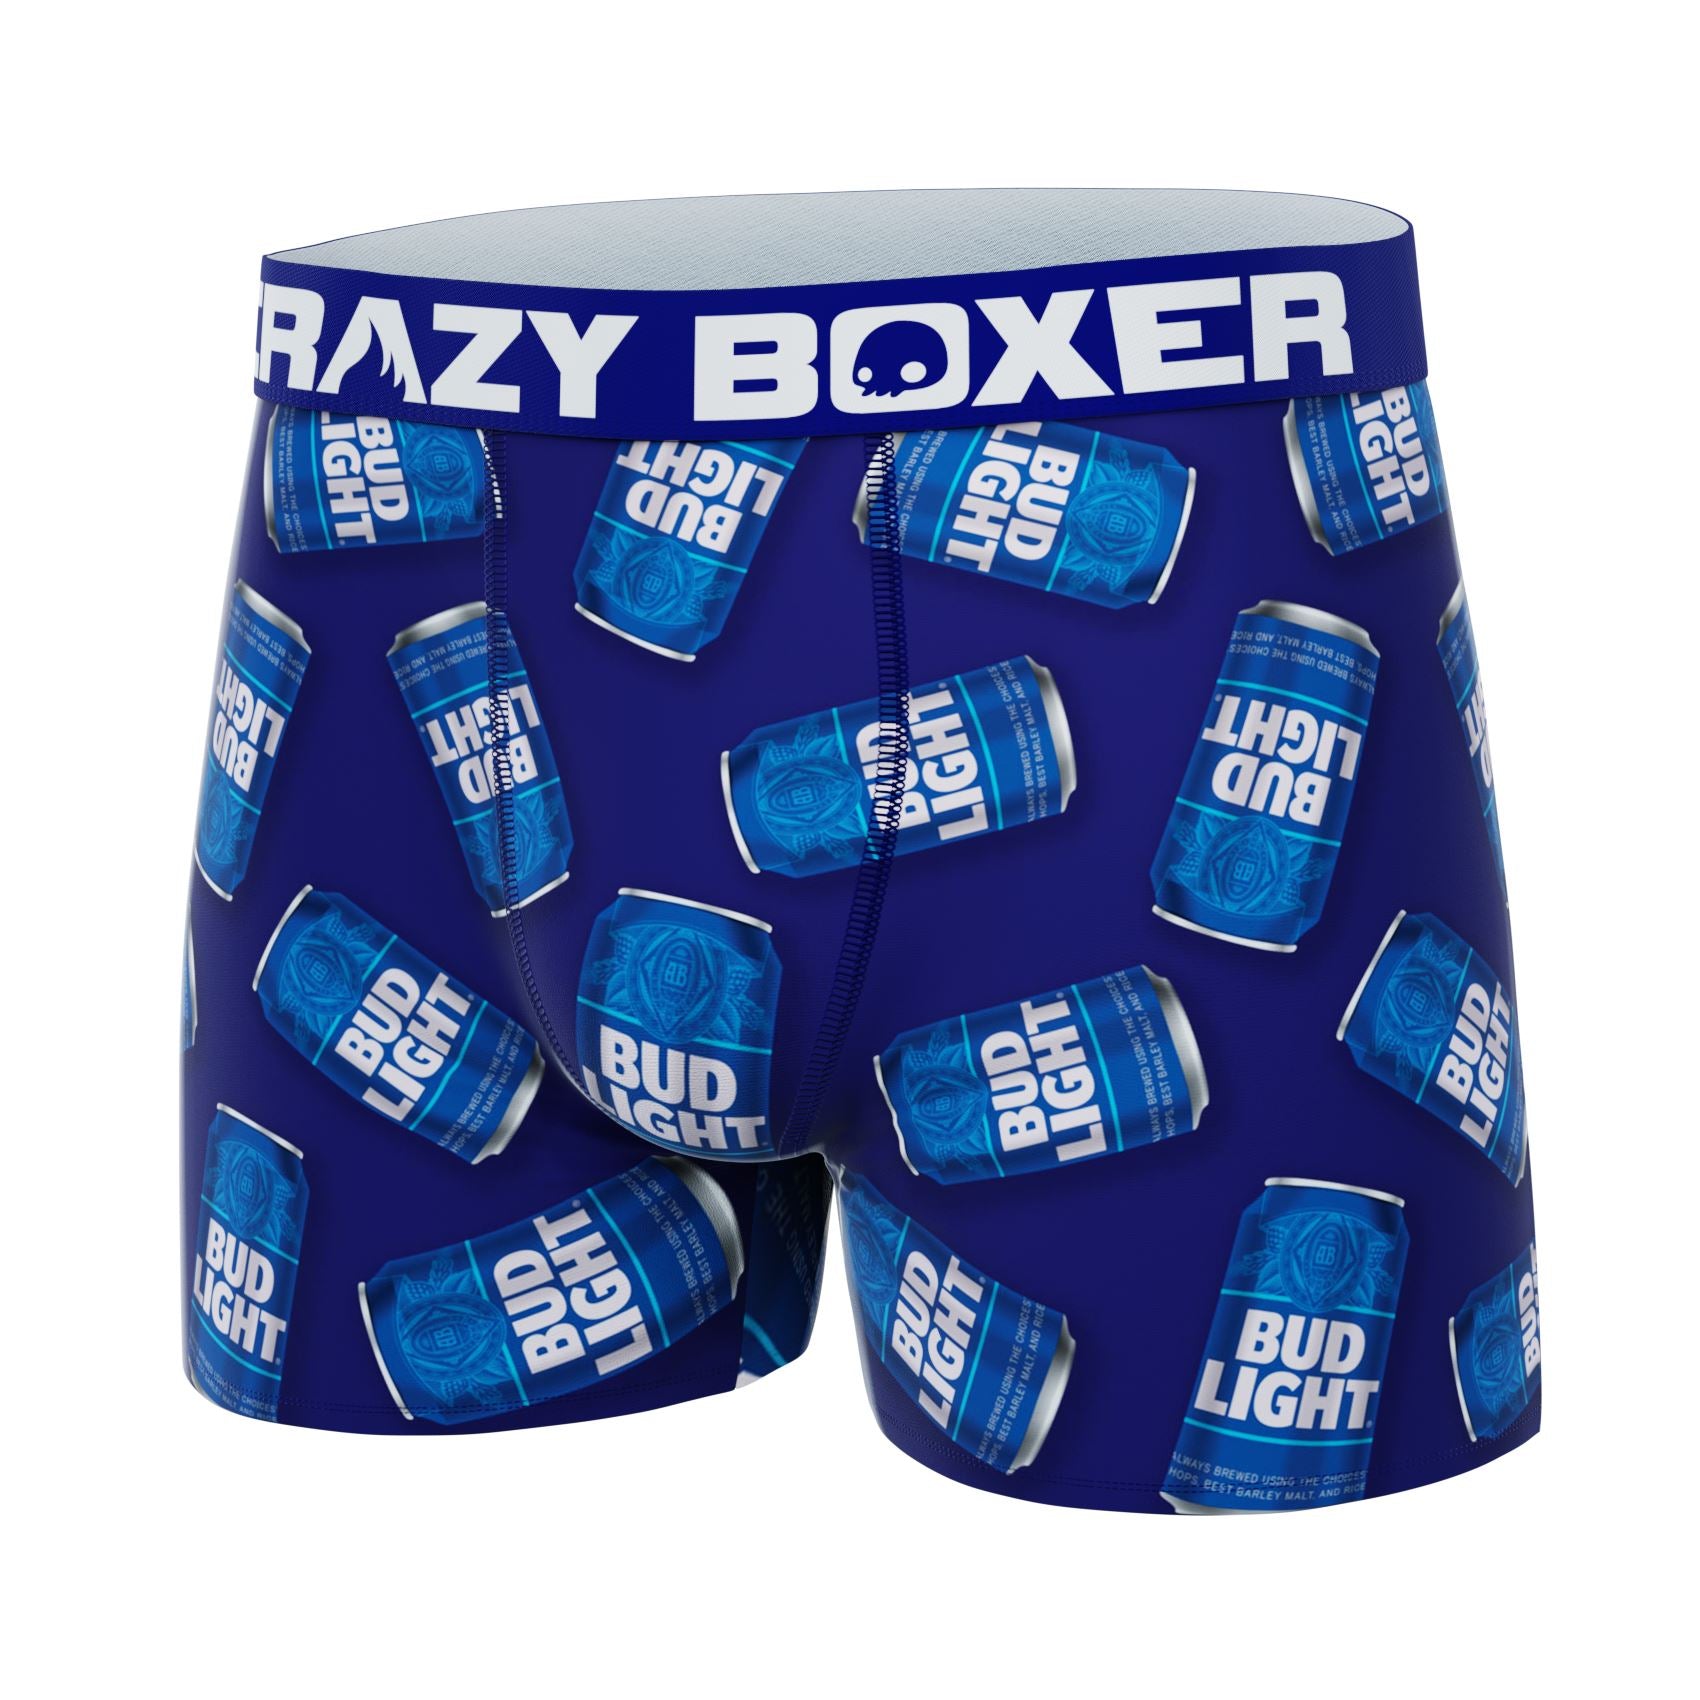 CRAZYBOXER Bud Light Men's Boxer Briefs (Creative Packaging)